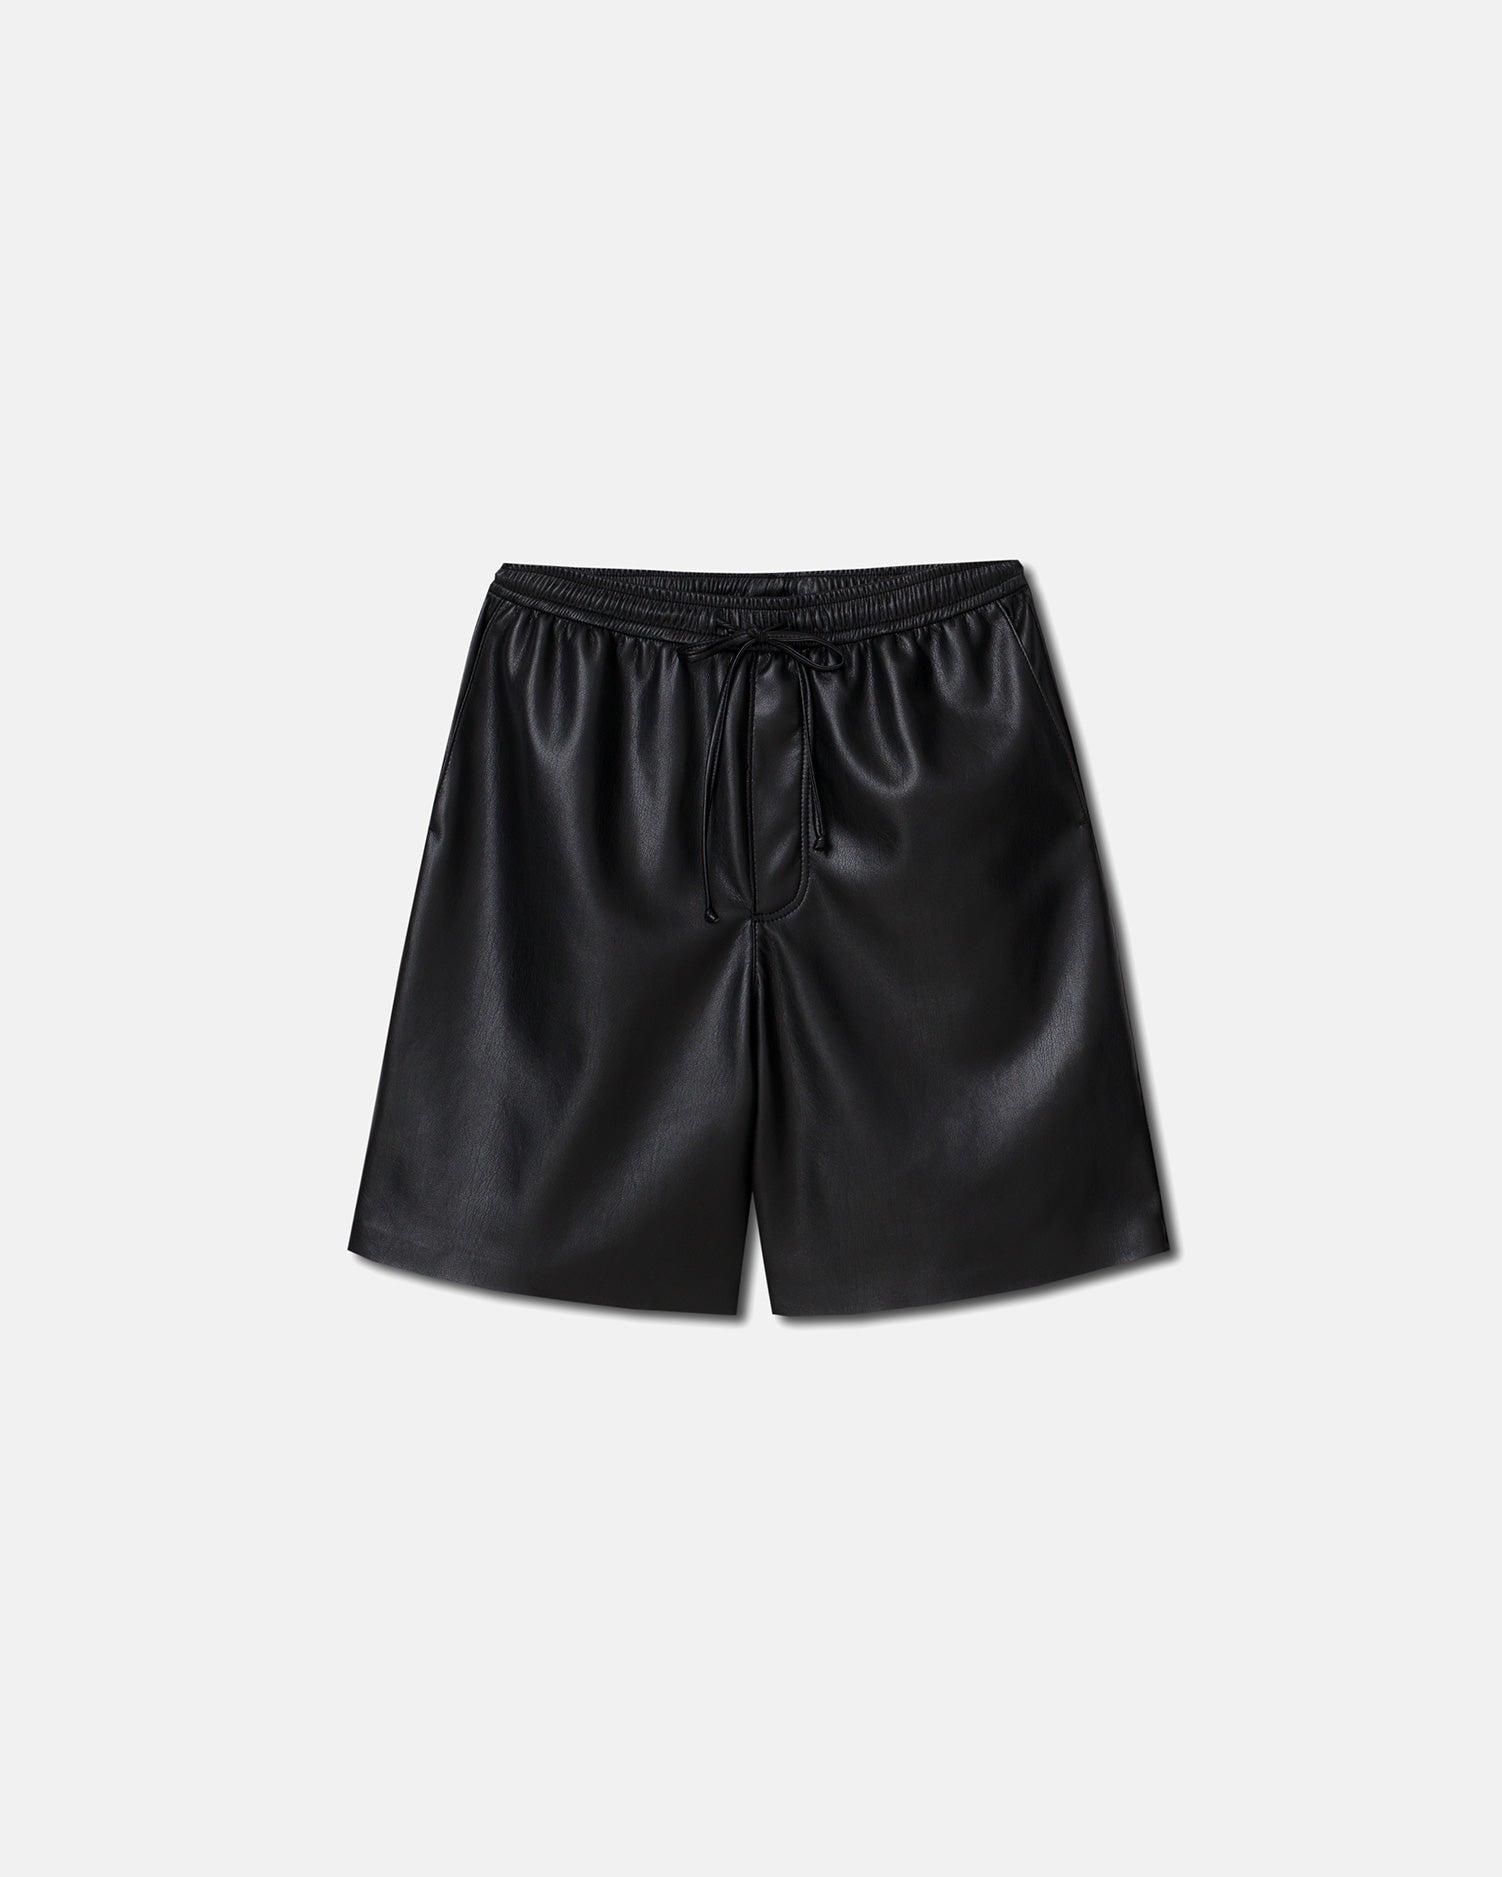 Danica Black Vegan Leather Shorts